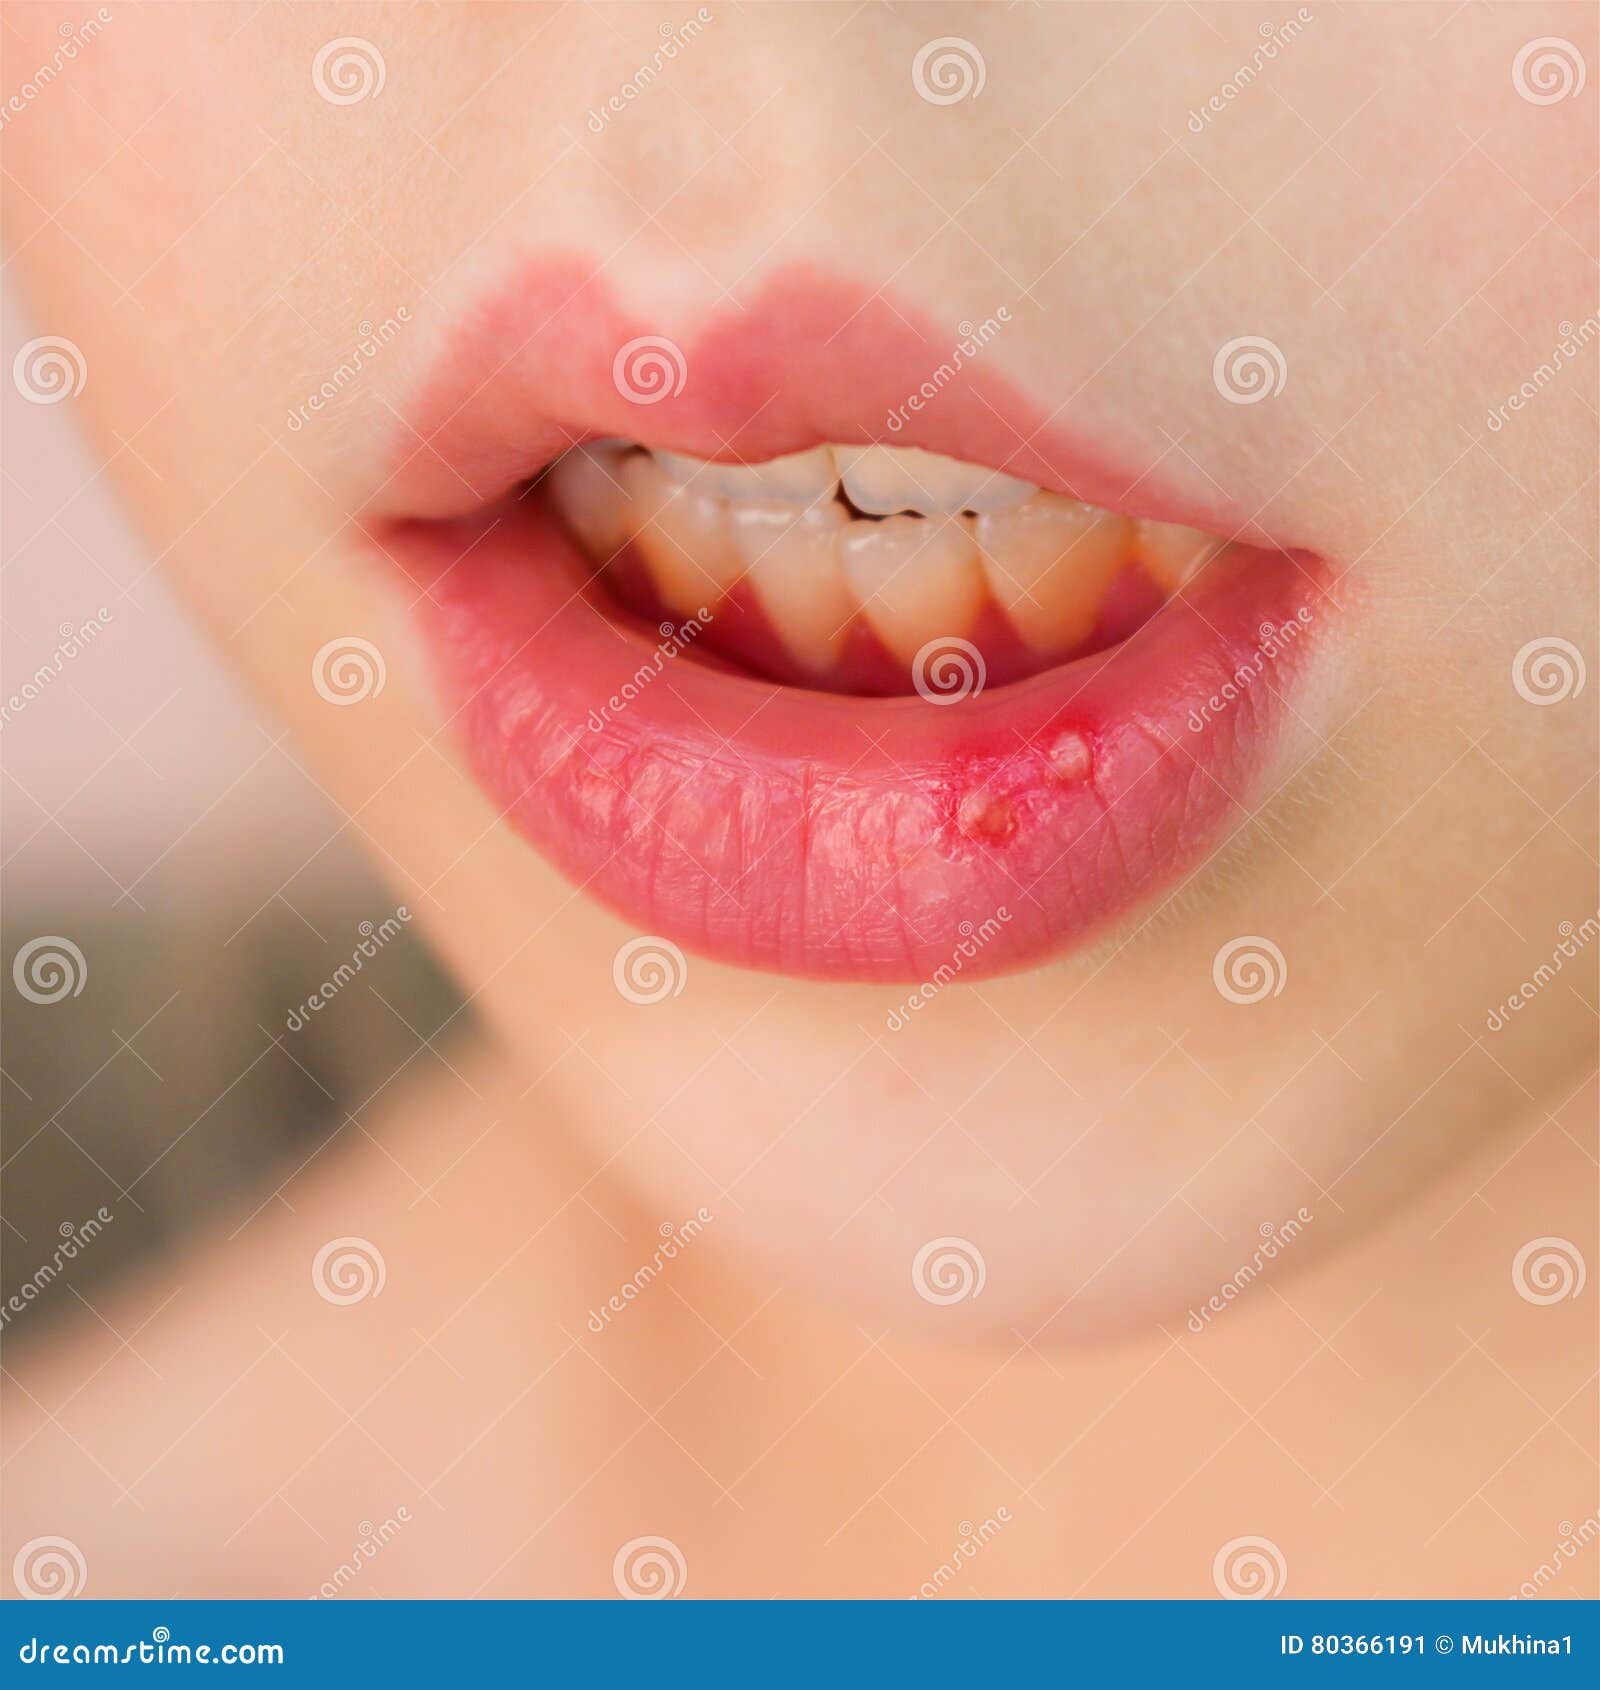 Stomatitis On Lip In Child Stock Image Image Of Childhood 80366191